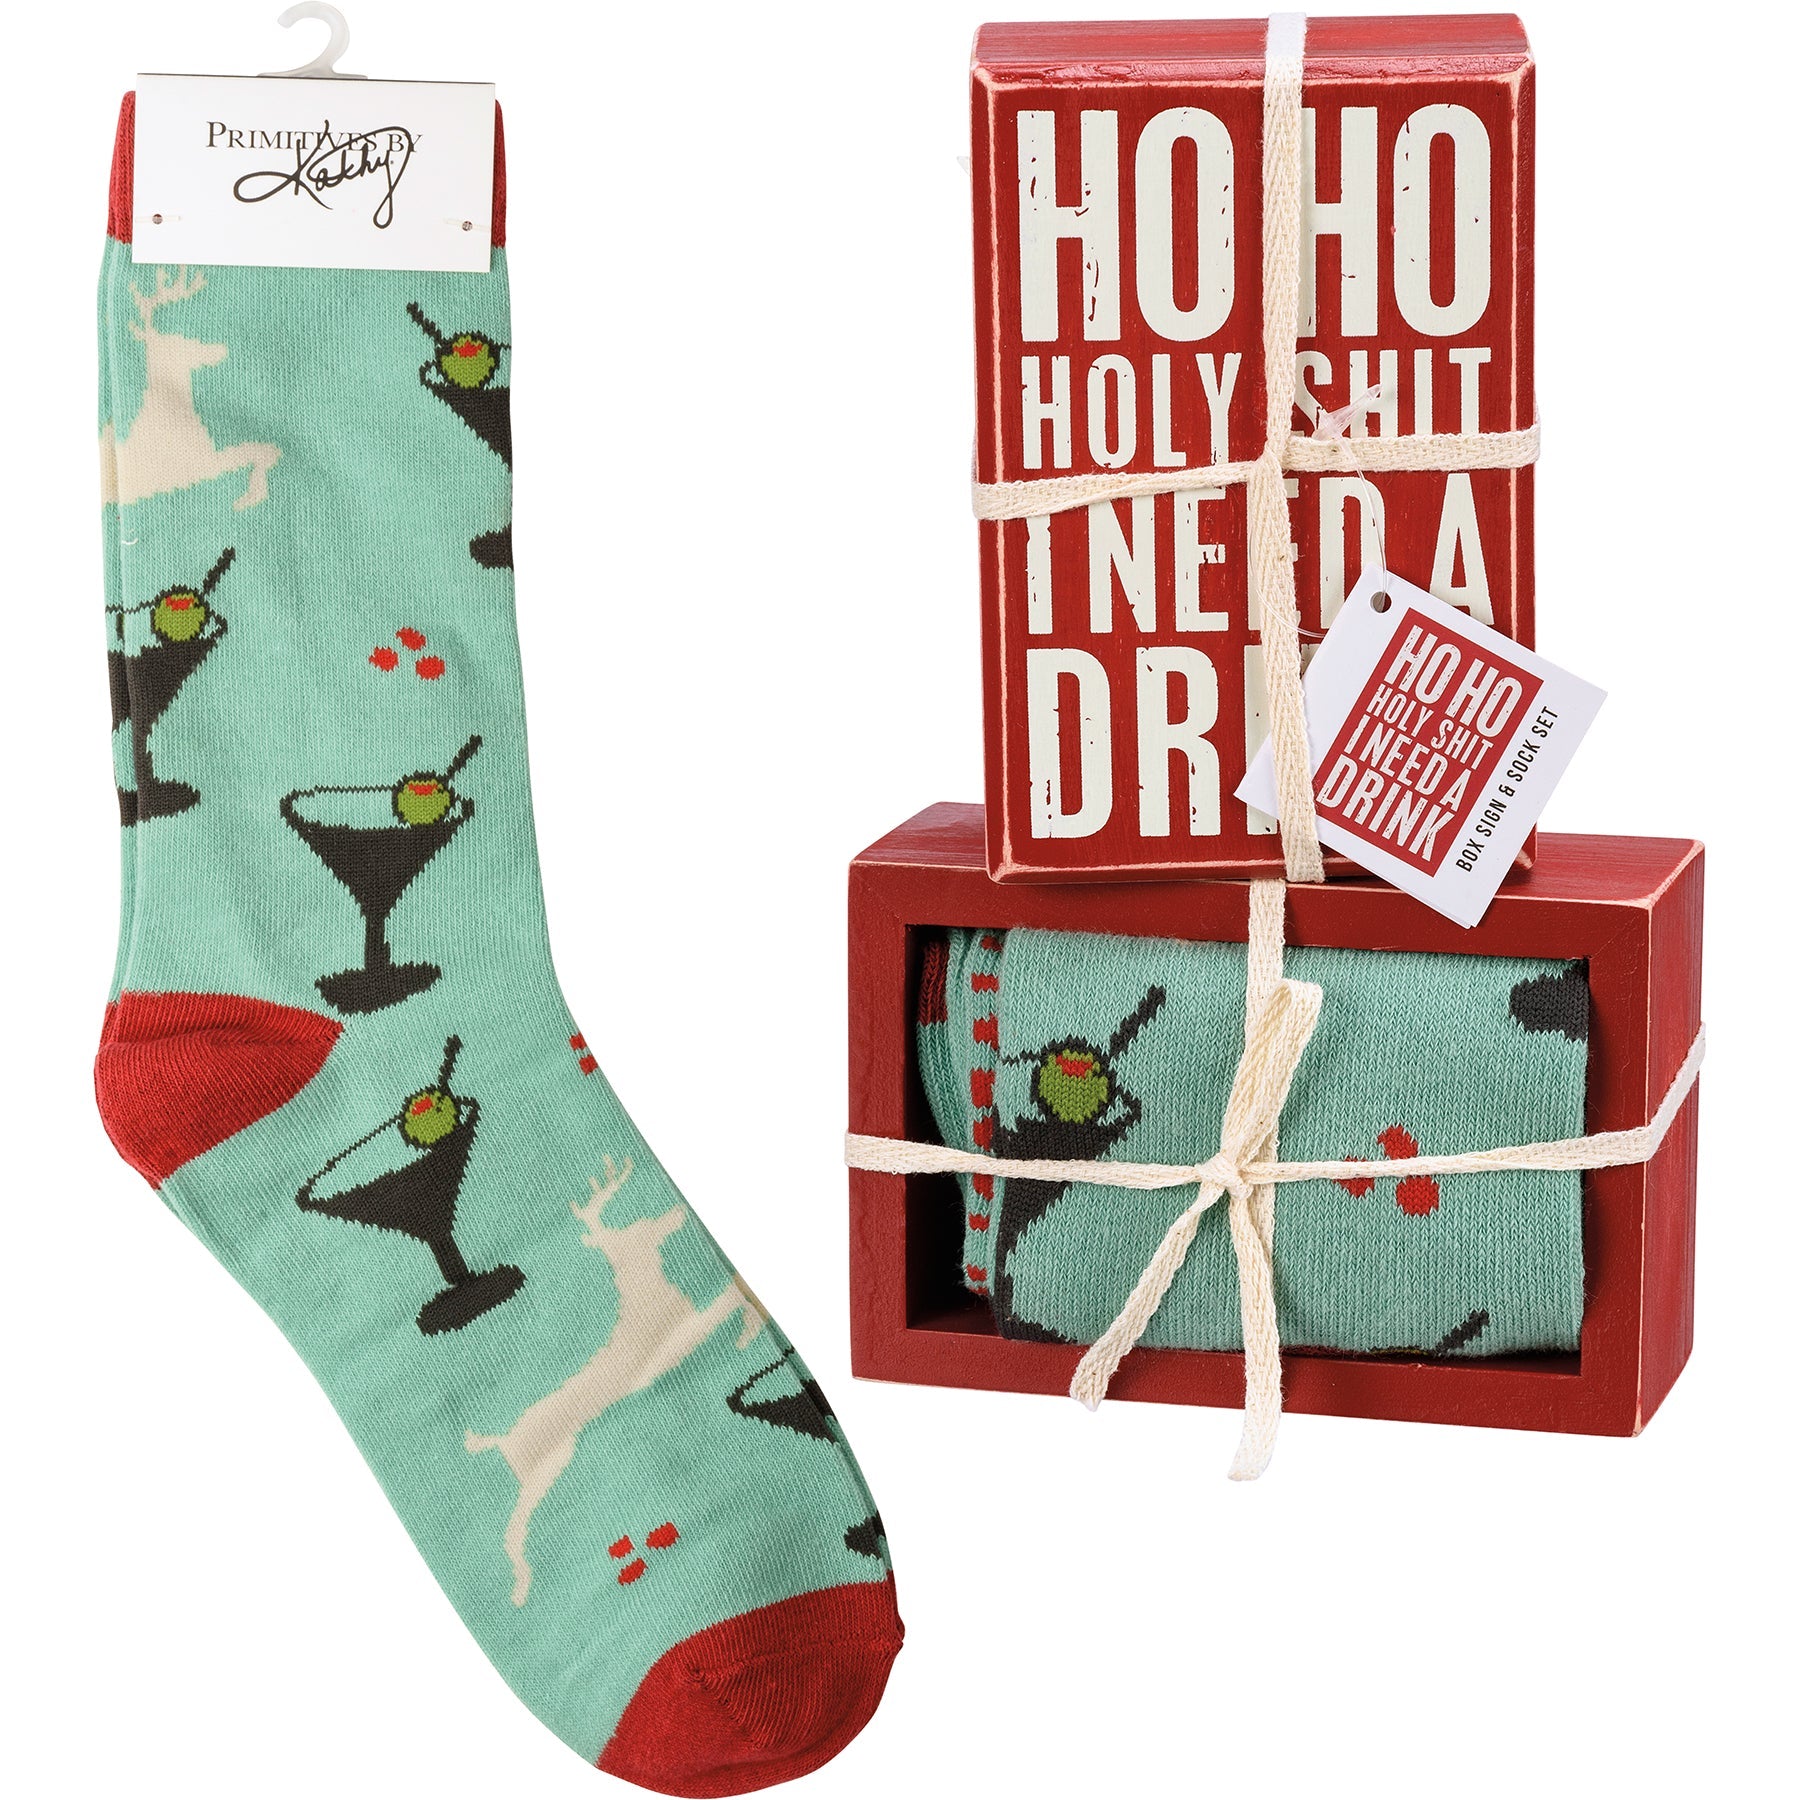 Ho Ho Holy Shit I Need A Drink Box Sign And Sock Giftable Set | Holiday Gift Set